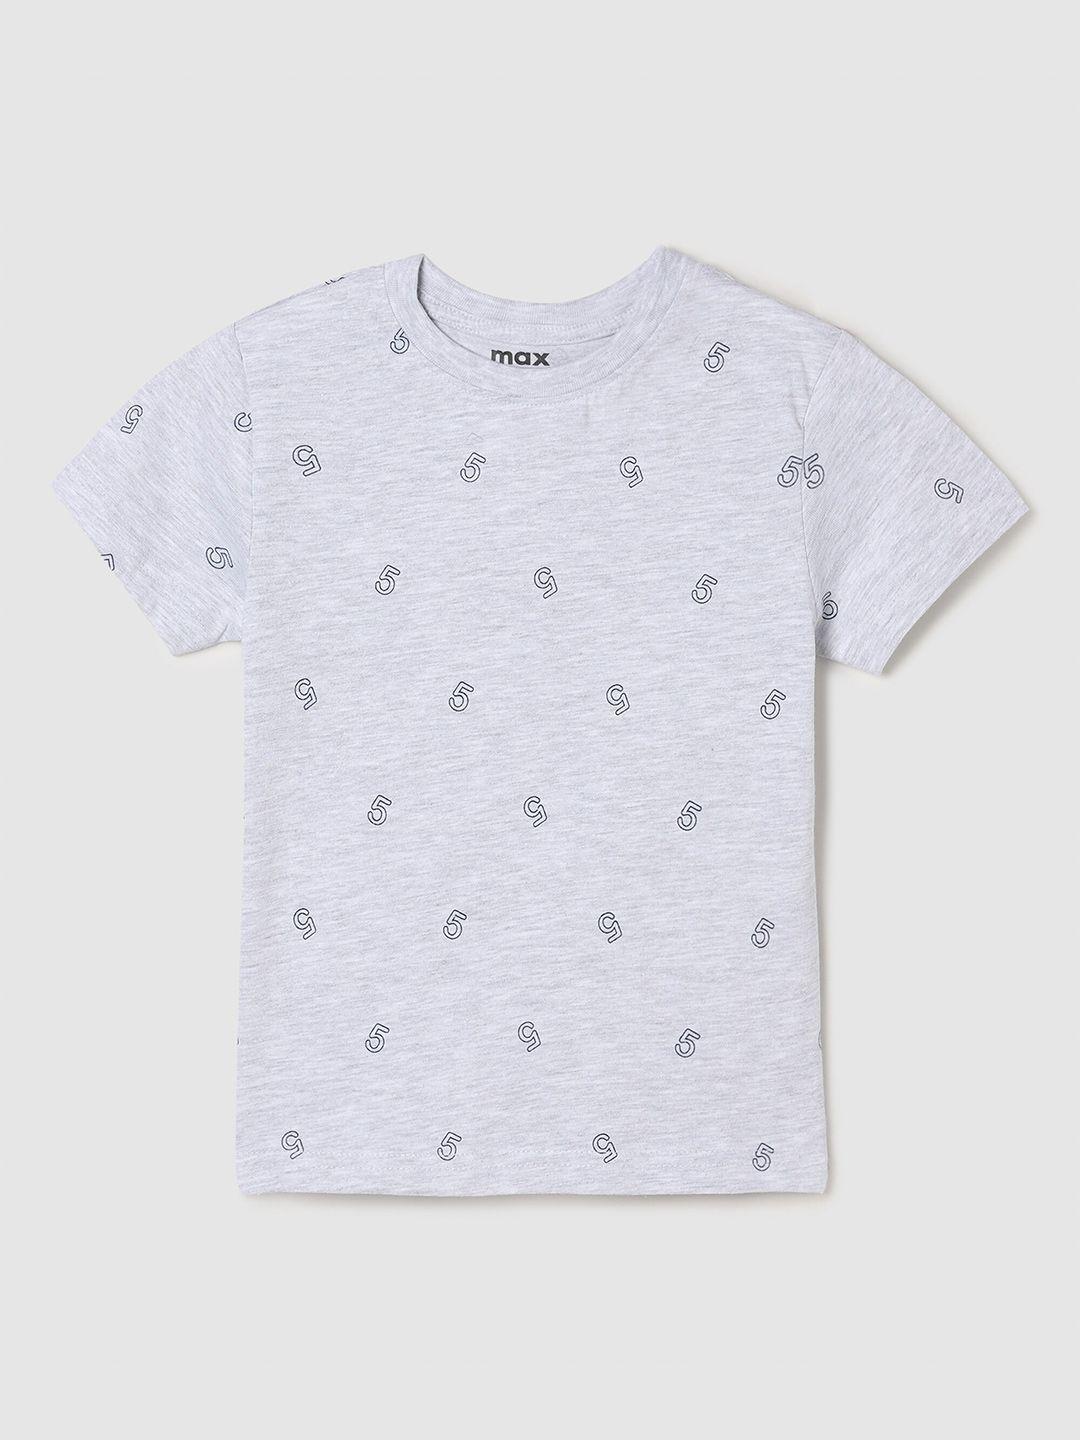 max boys grey printed pure cotton t-shirt